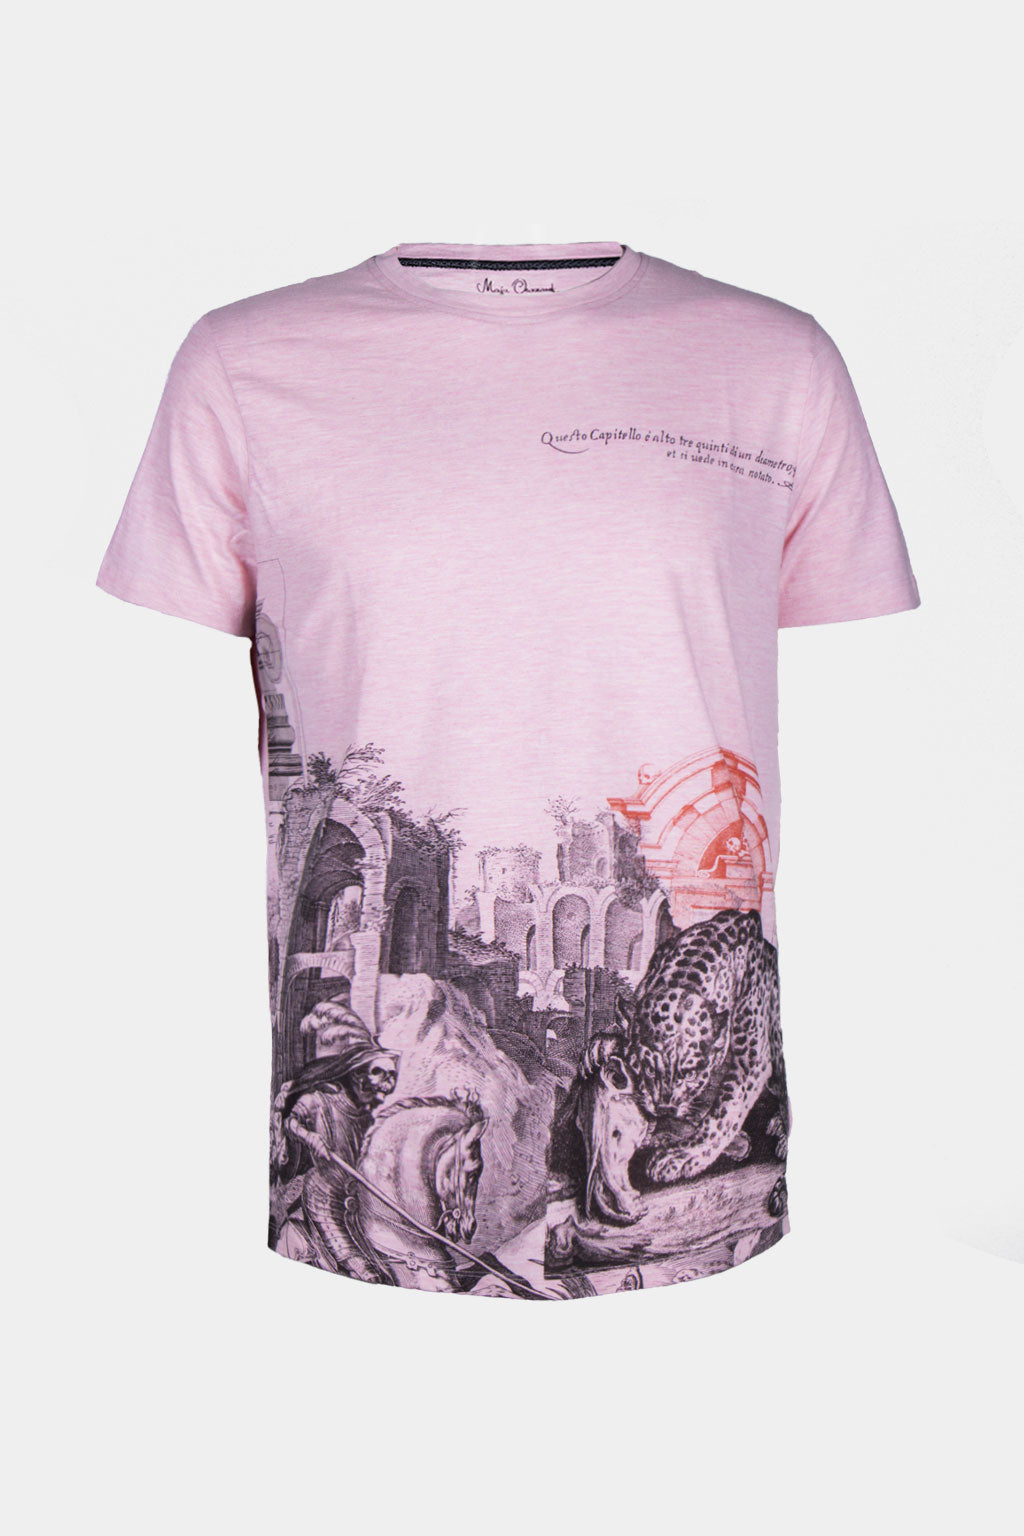 Medicine - Men's cotton T-shirt with a print